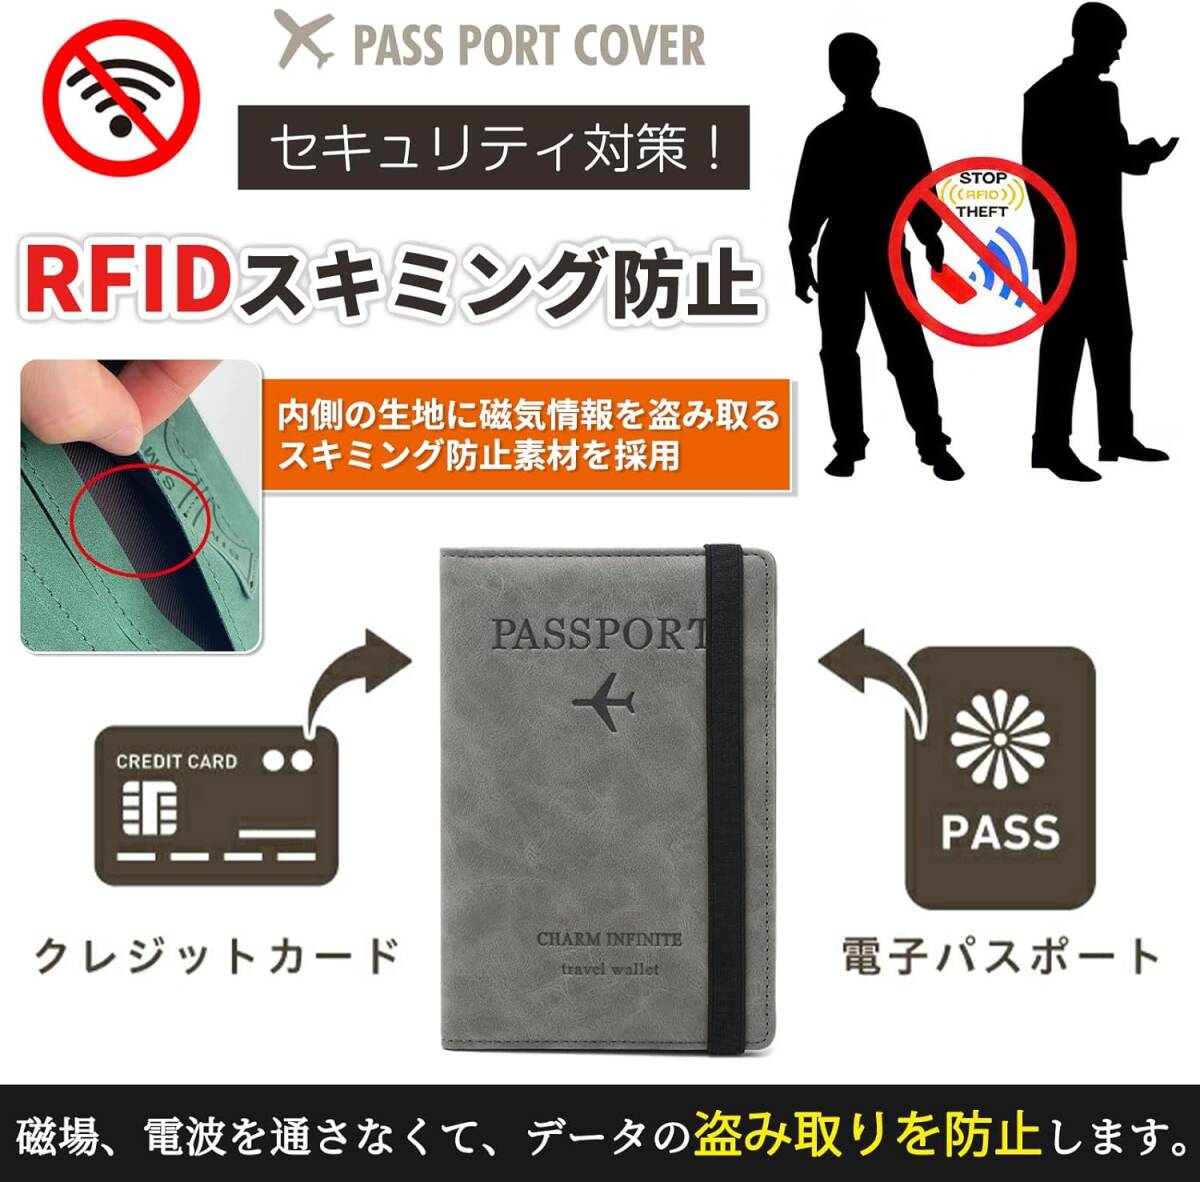 [GOKEI] パスポートケース スキミング防止 レザー 上質 パスポートカバー カバー パスポート 多機能収納 盗難防止 セキュ_画像3